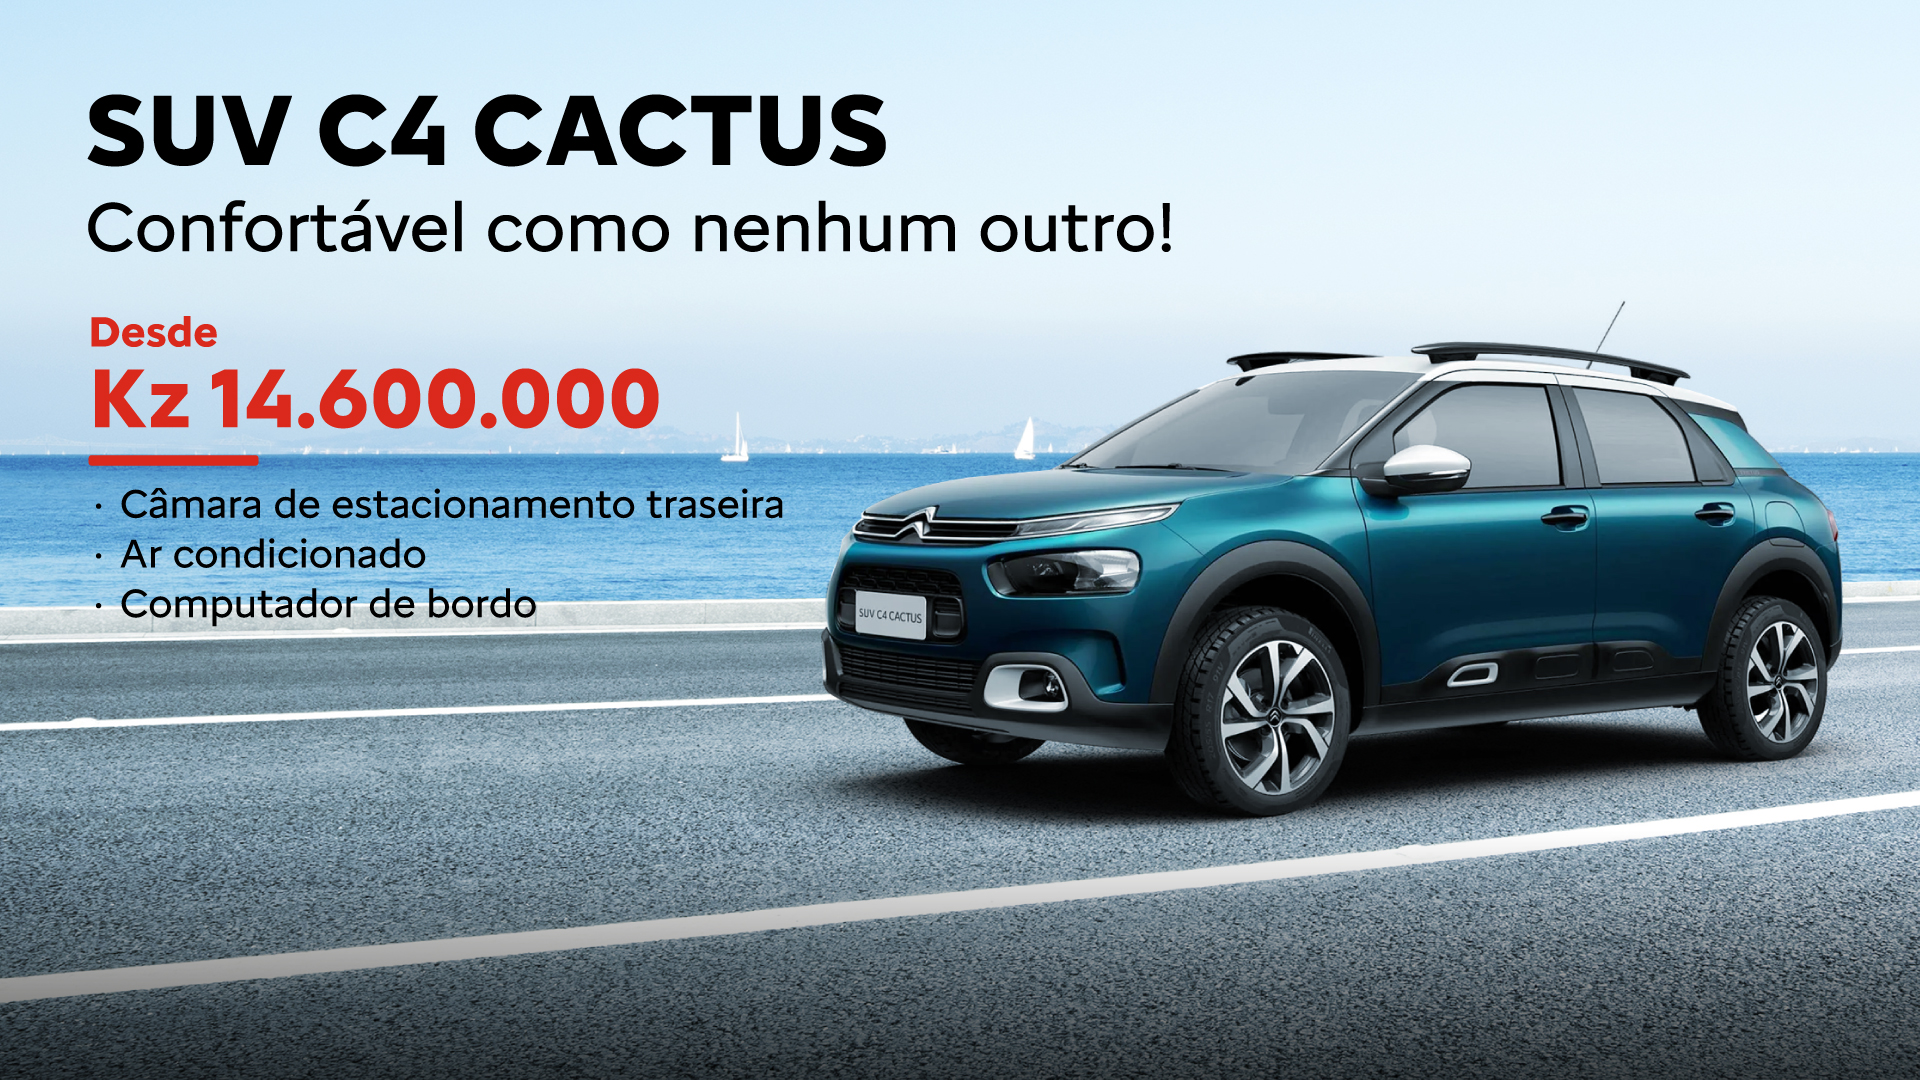 Citroën C4 Cactus agora desde 14.600.000 Kz